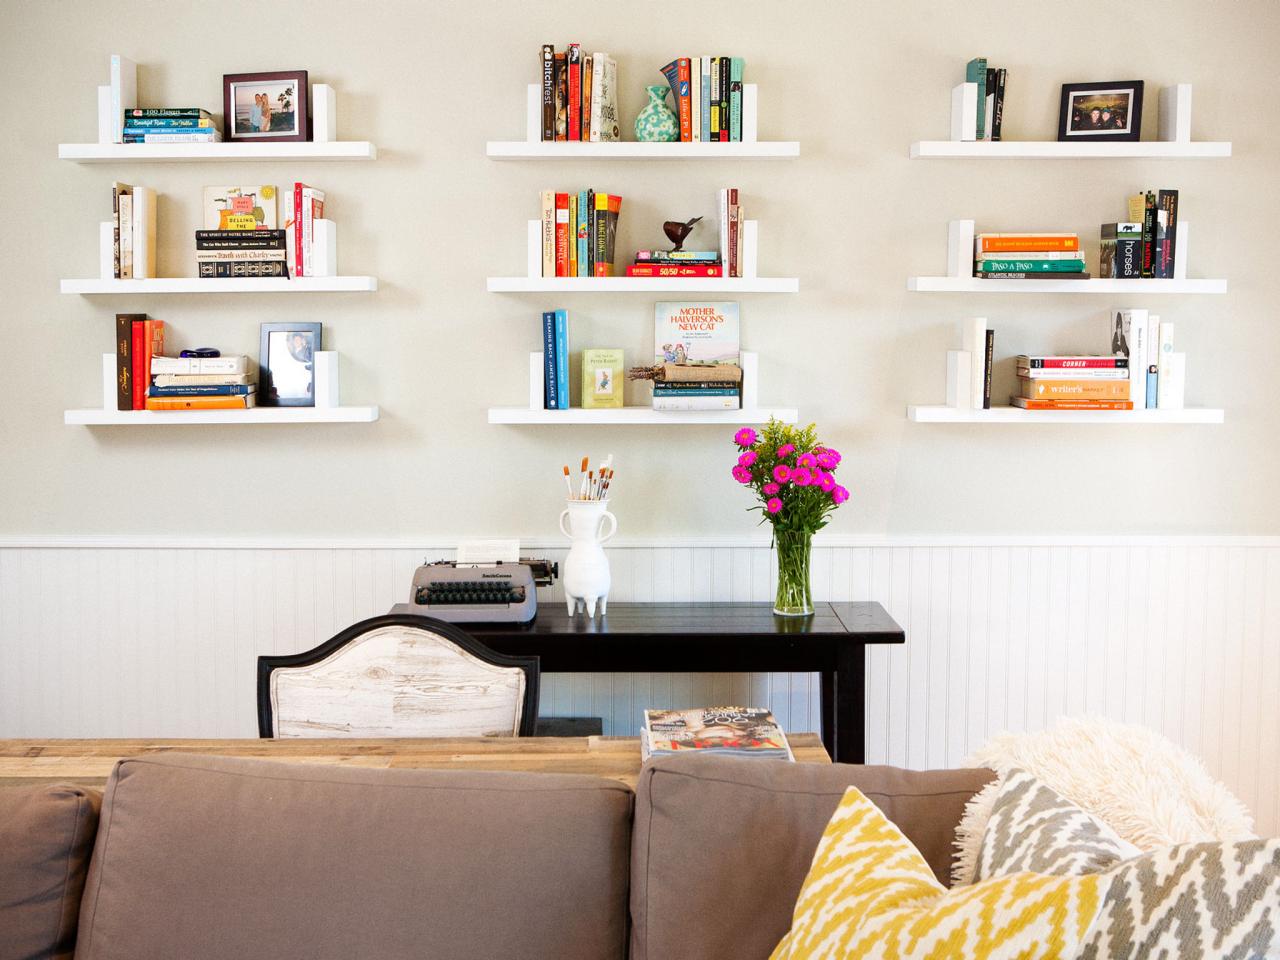 12 Ways to Decorate With Floating Shelves | HGTV's Decorating & Design Blog  | HGTV